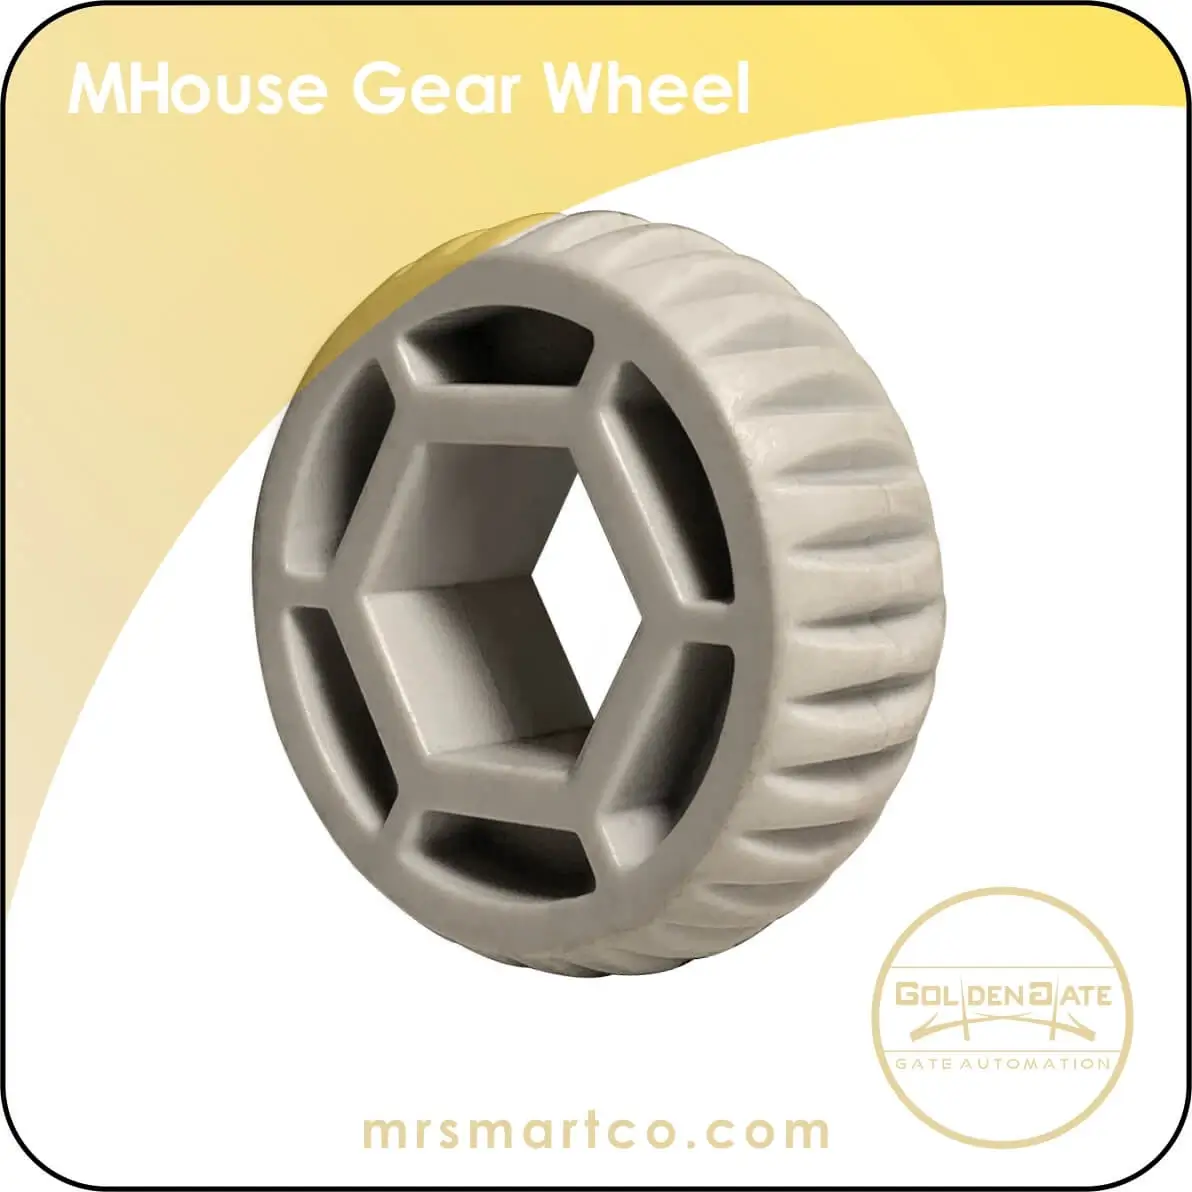 MHouse Gear Wheel